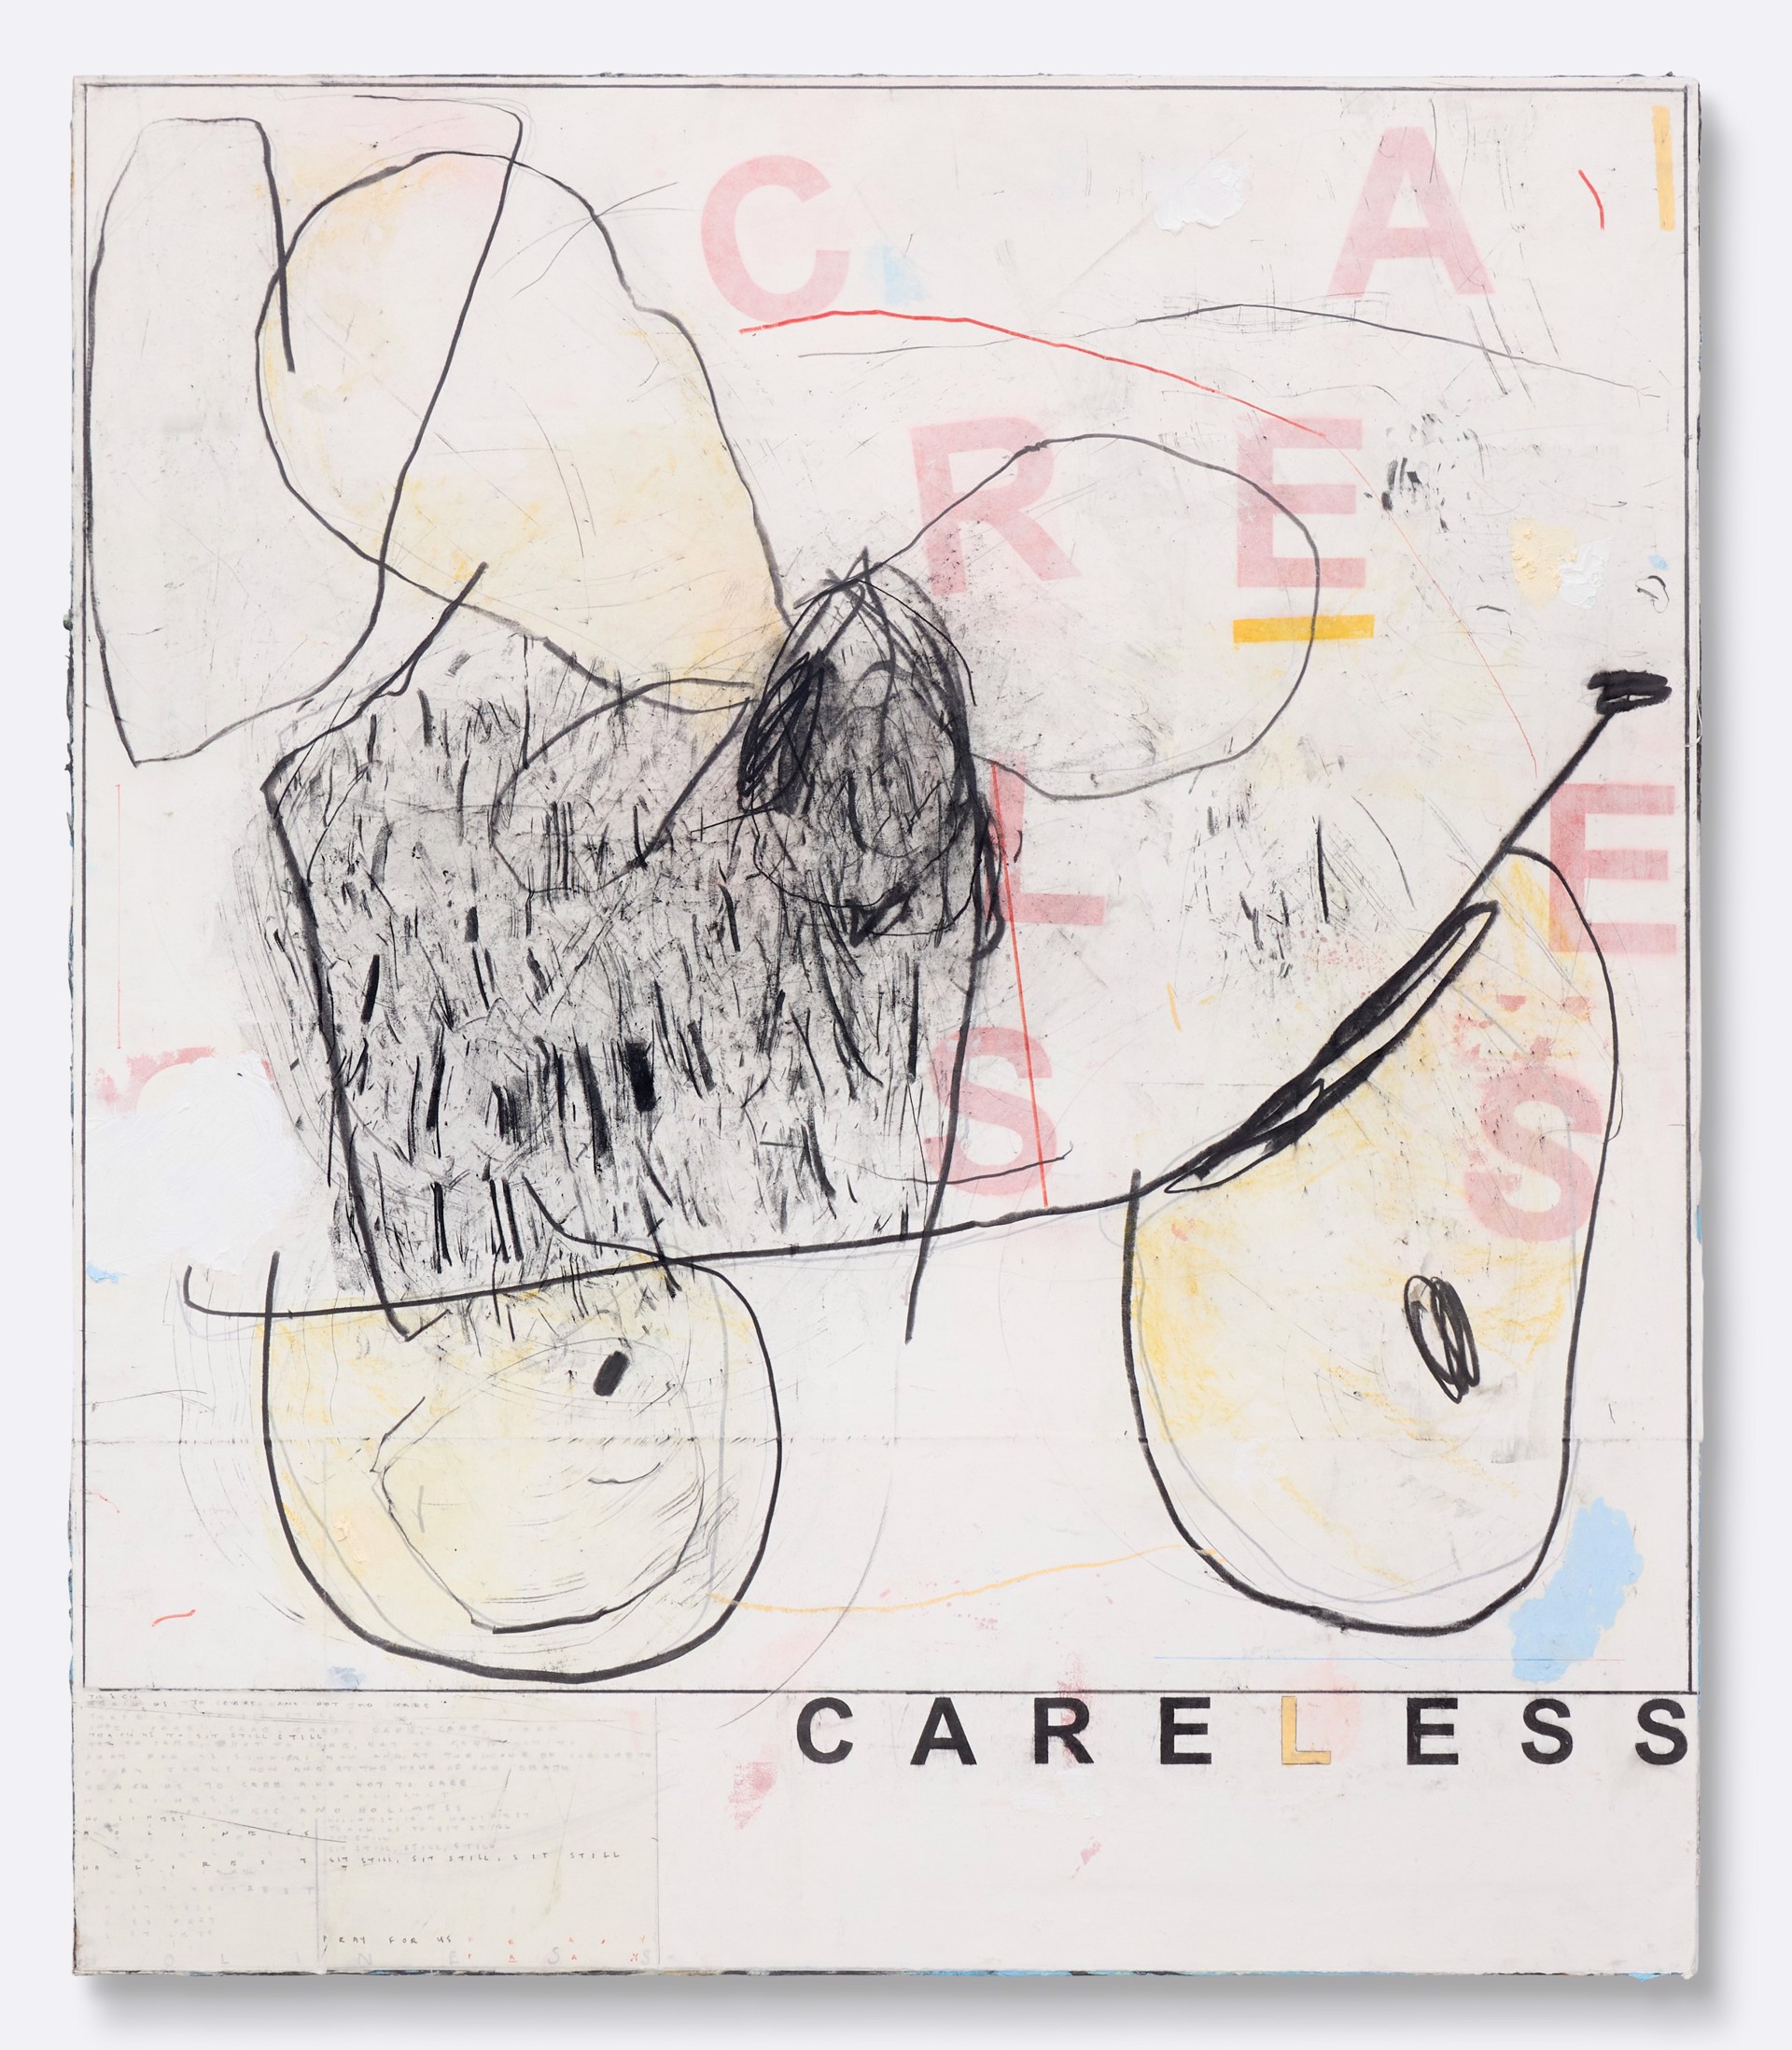 Careless, Care Less by SETH BAUSERMAN